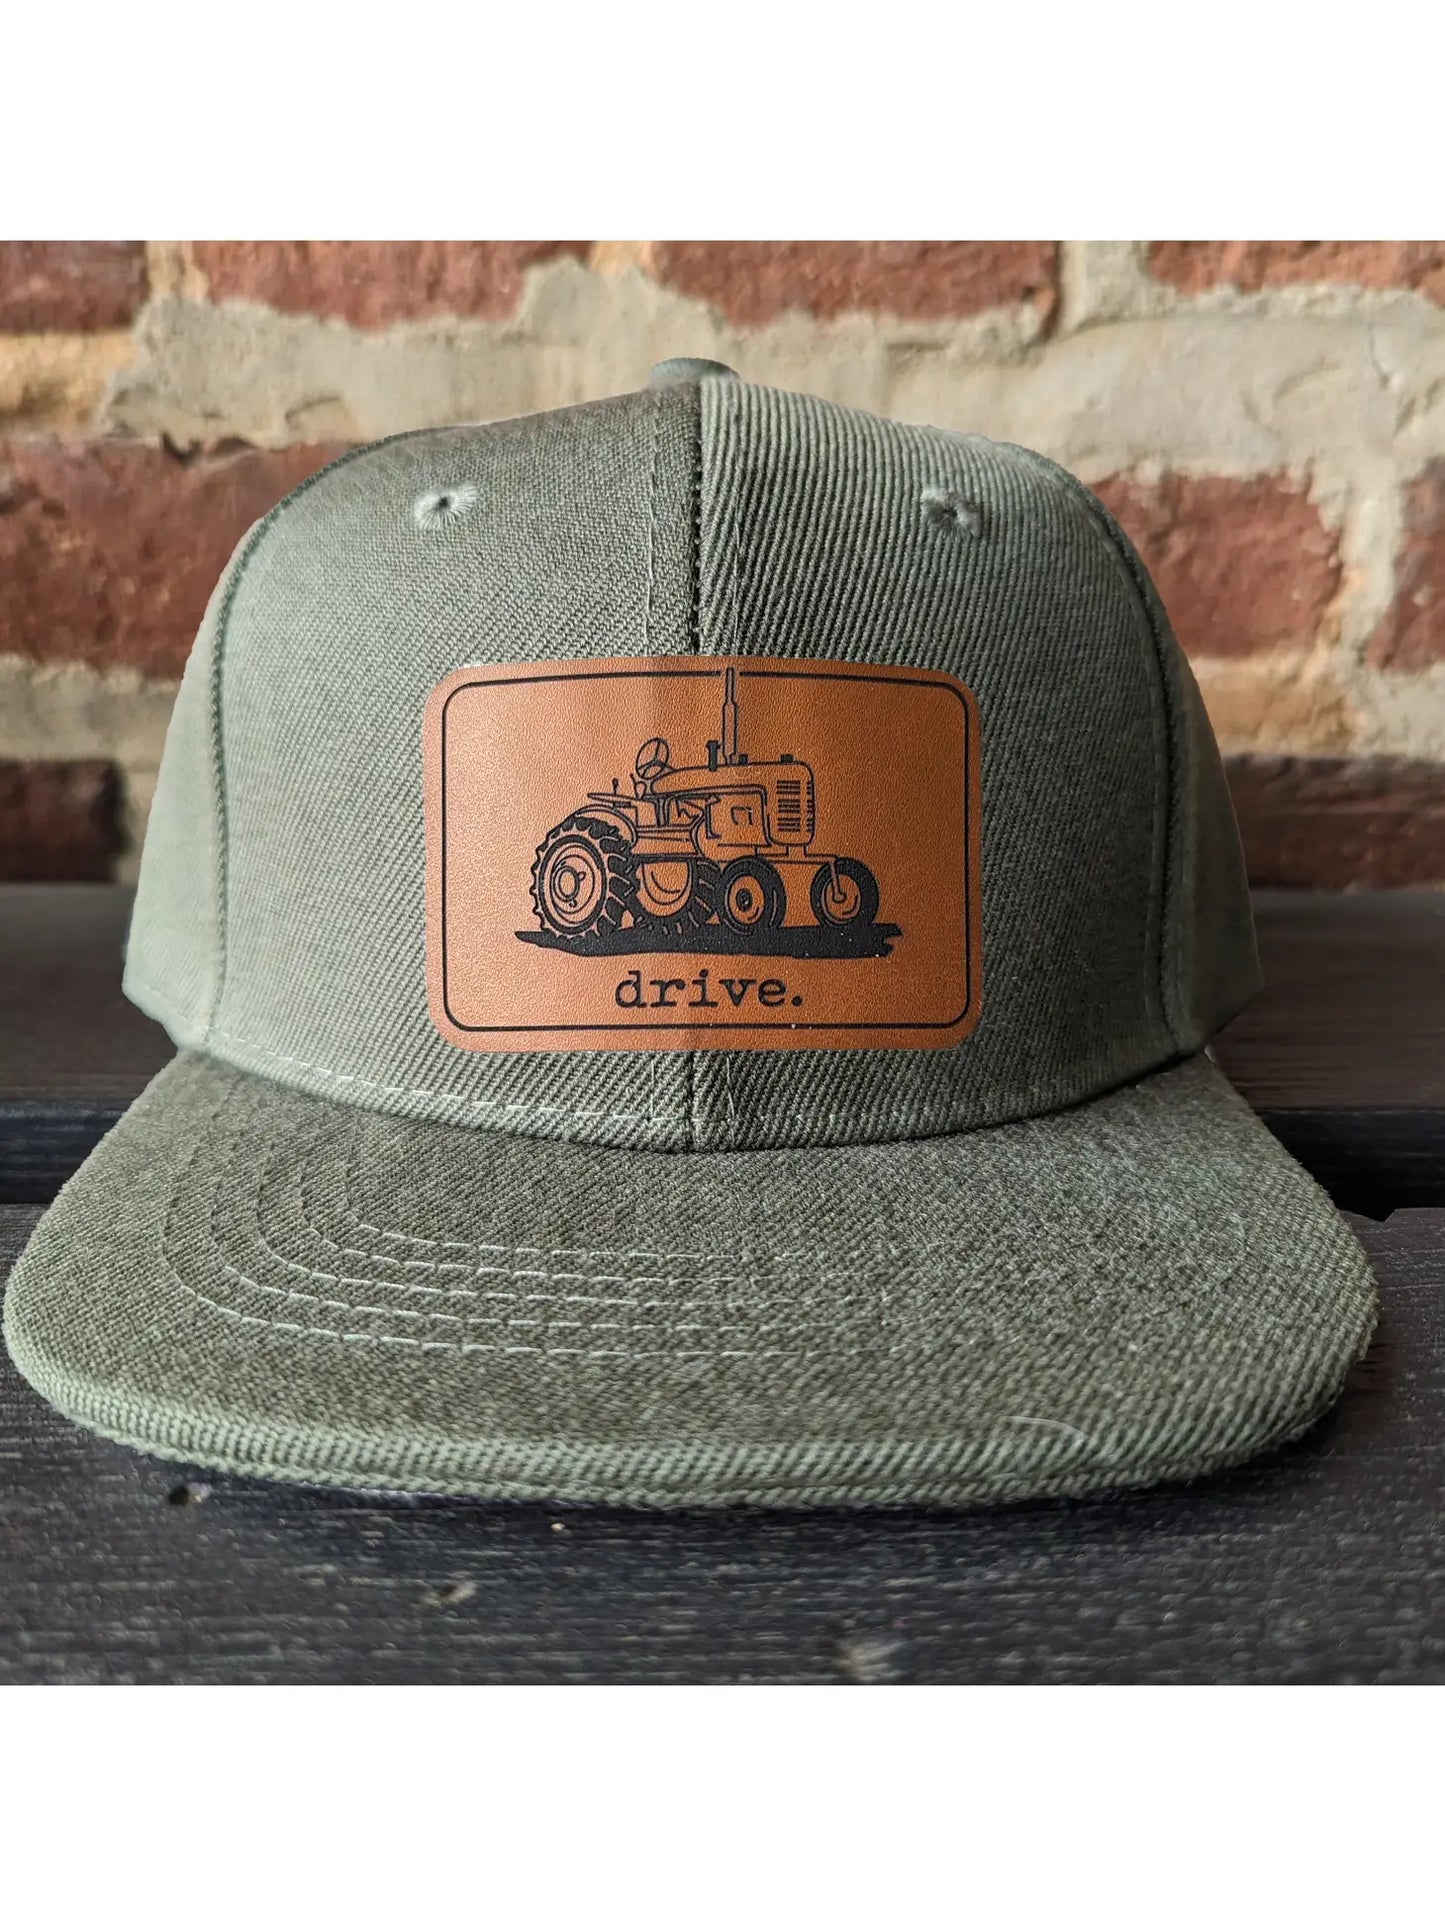 Kids Tractor Hat